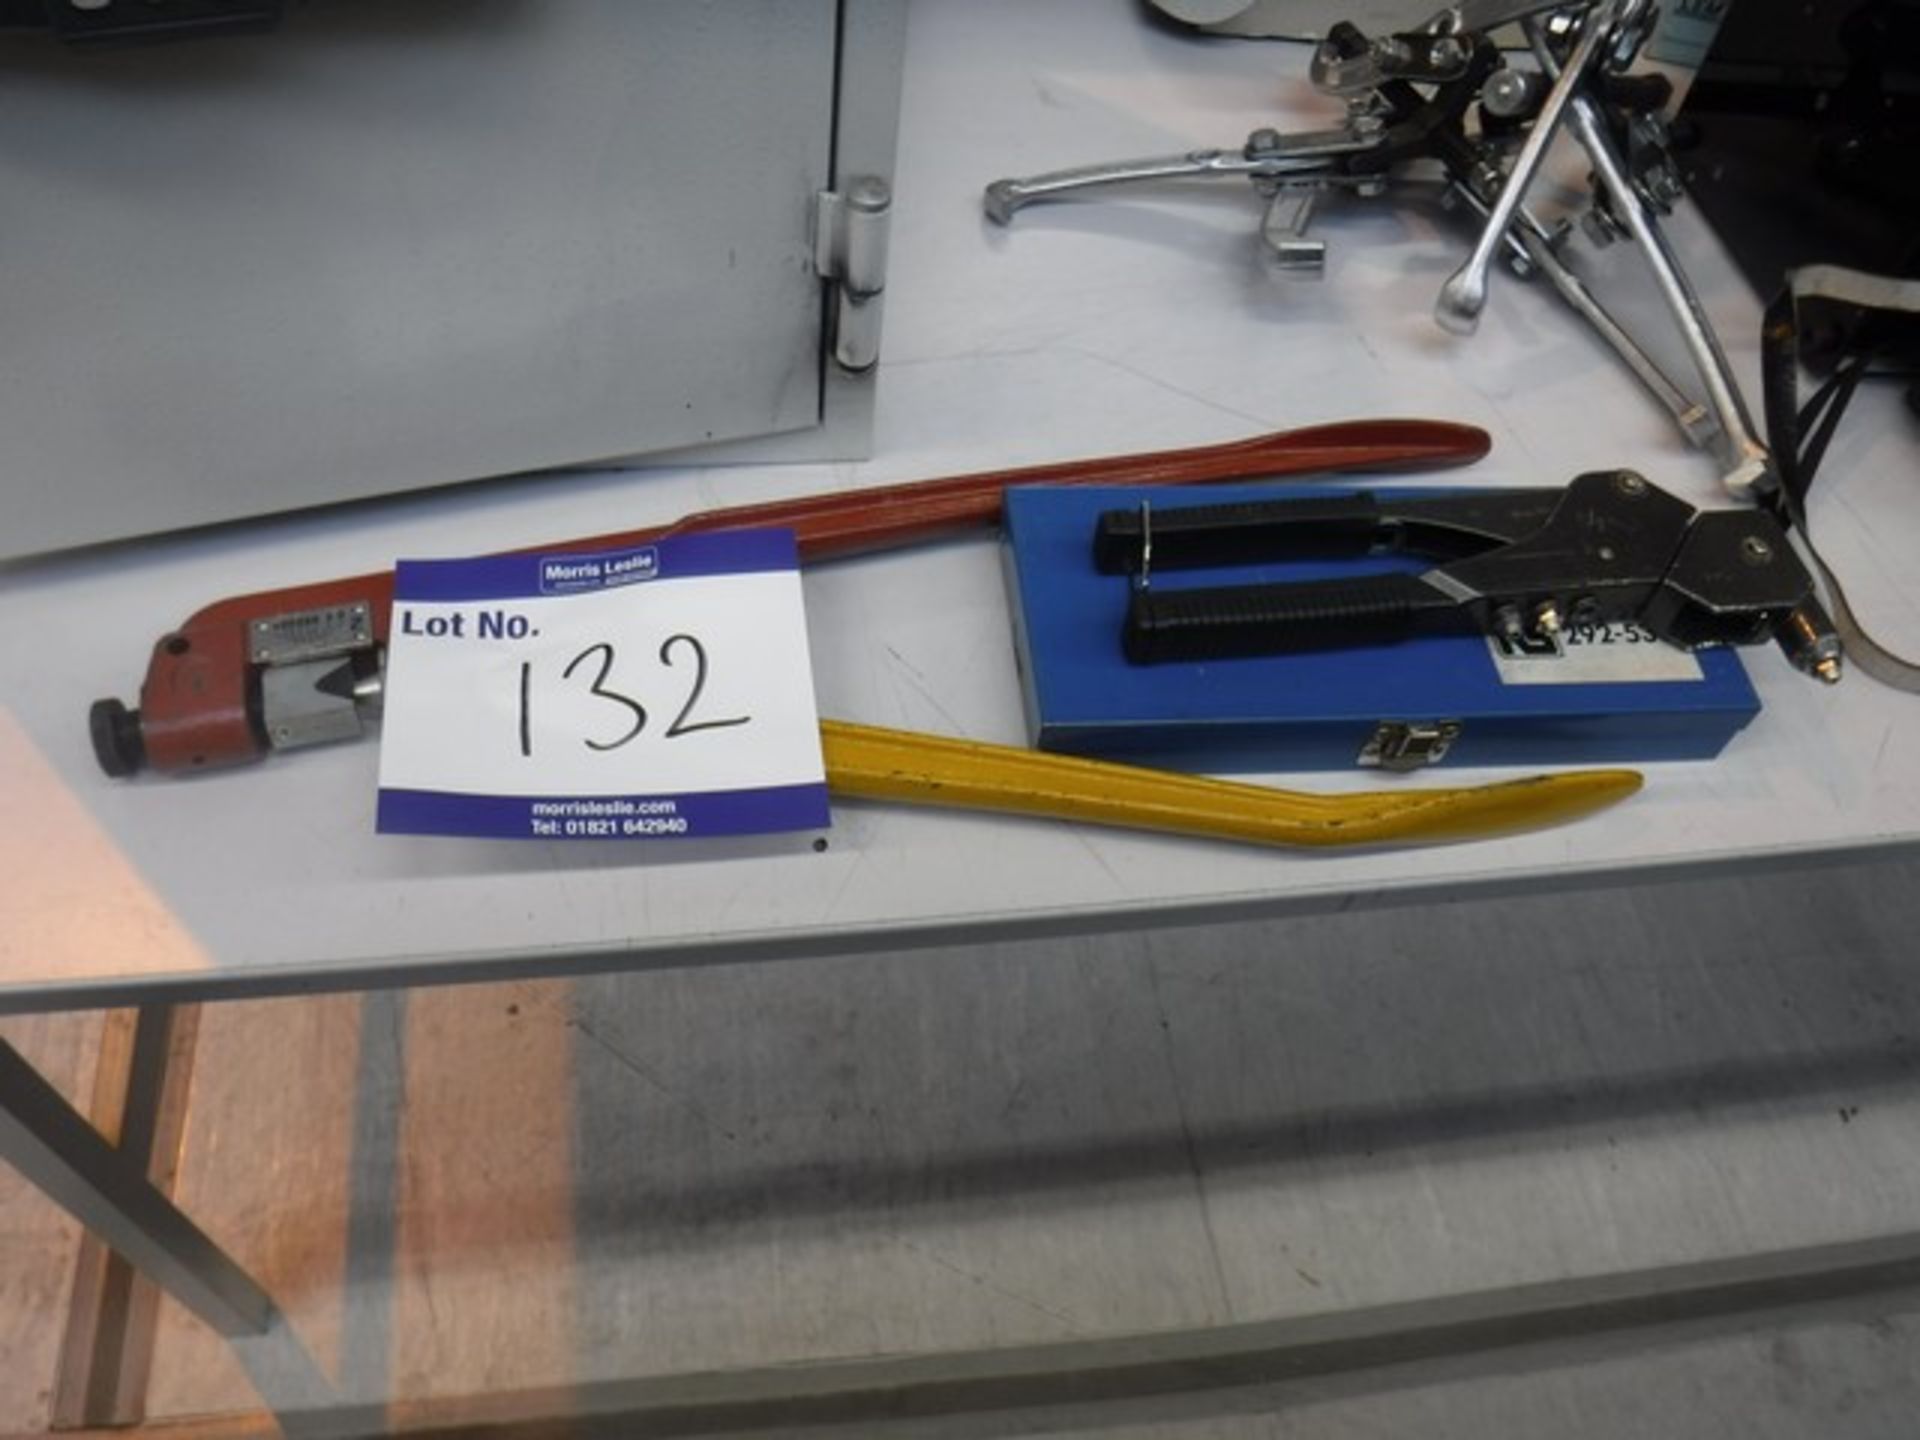 Pot rivet guns x2 and jointing tool - Image 2 of 2